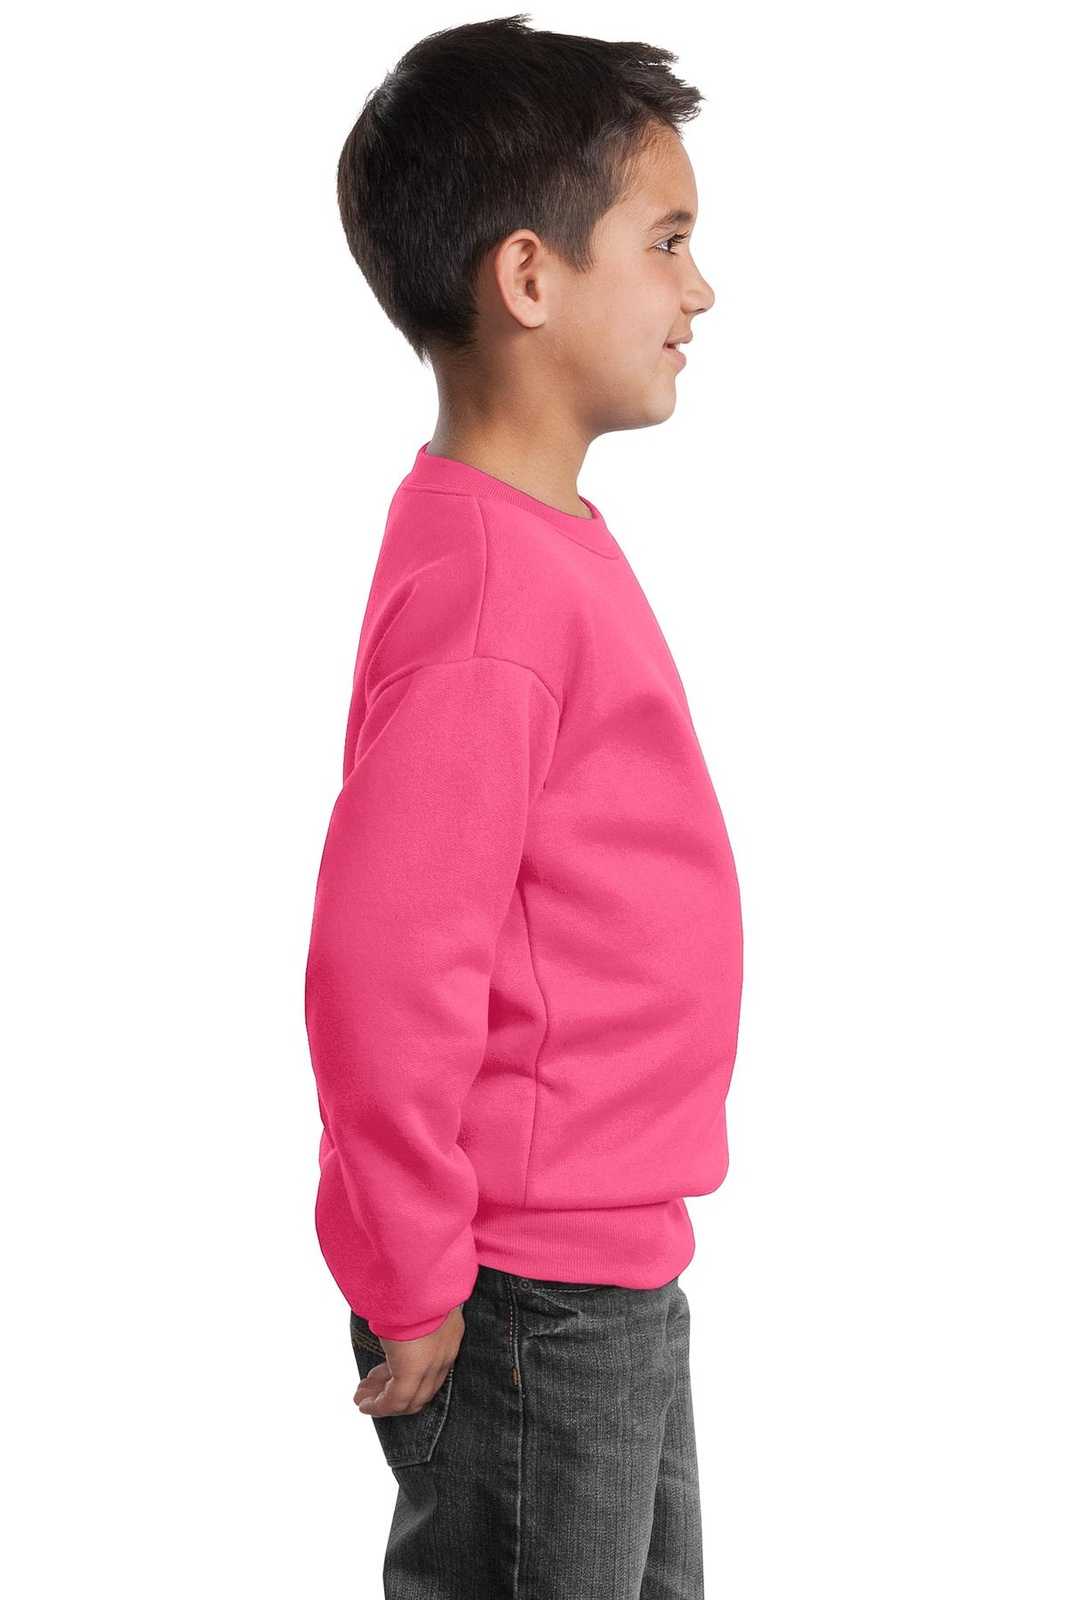 Port &amp; Company PC90Y Youth Core Fleece Crewneck Sweatshirt - Neon Pink - HIT a Double - 3